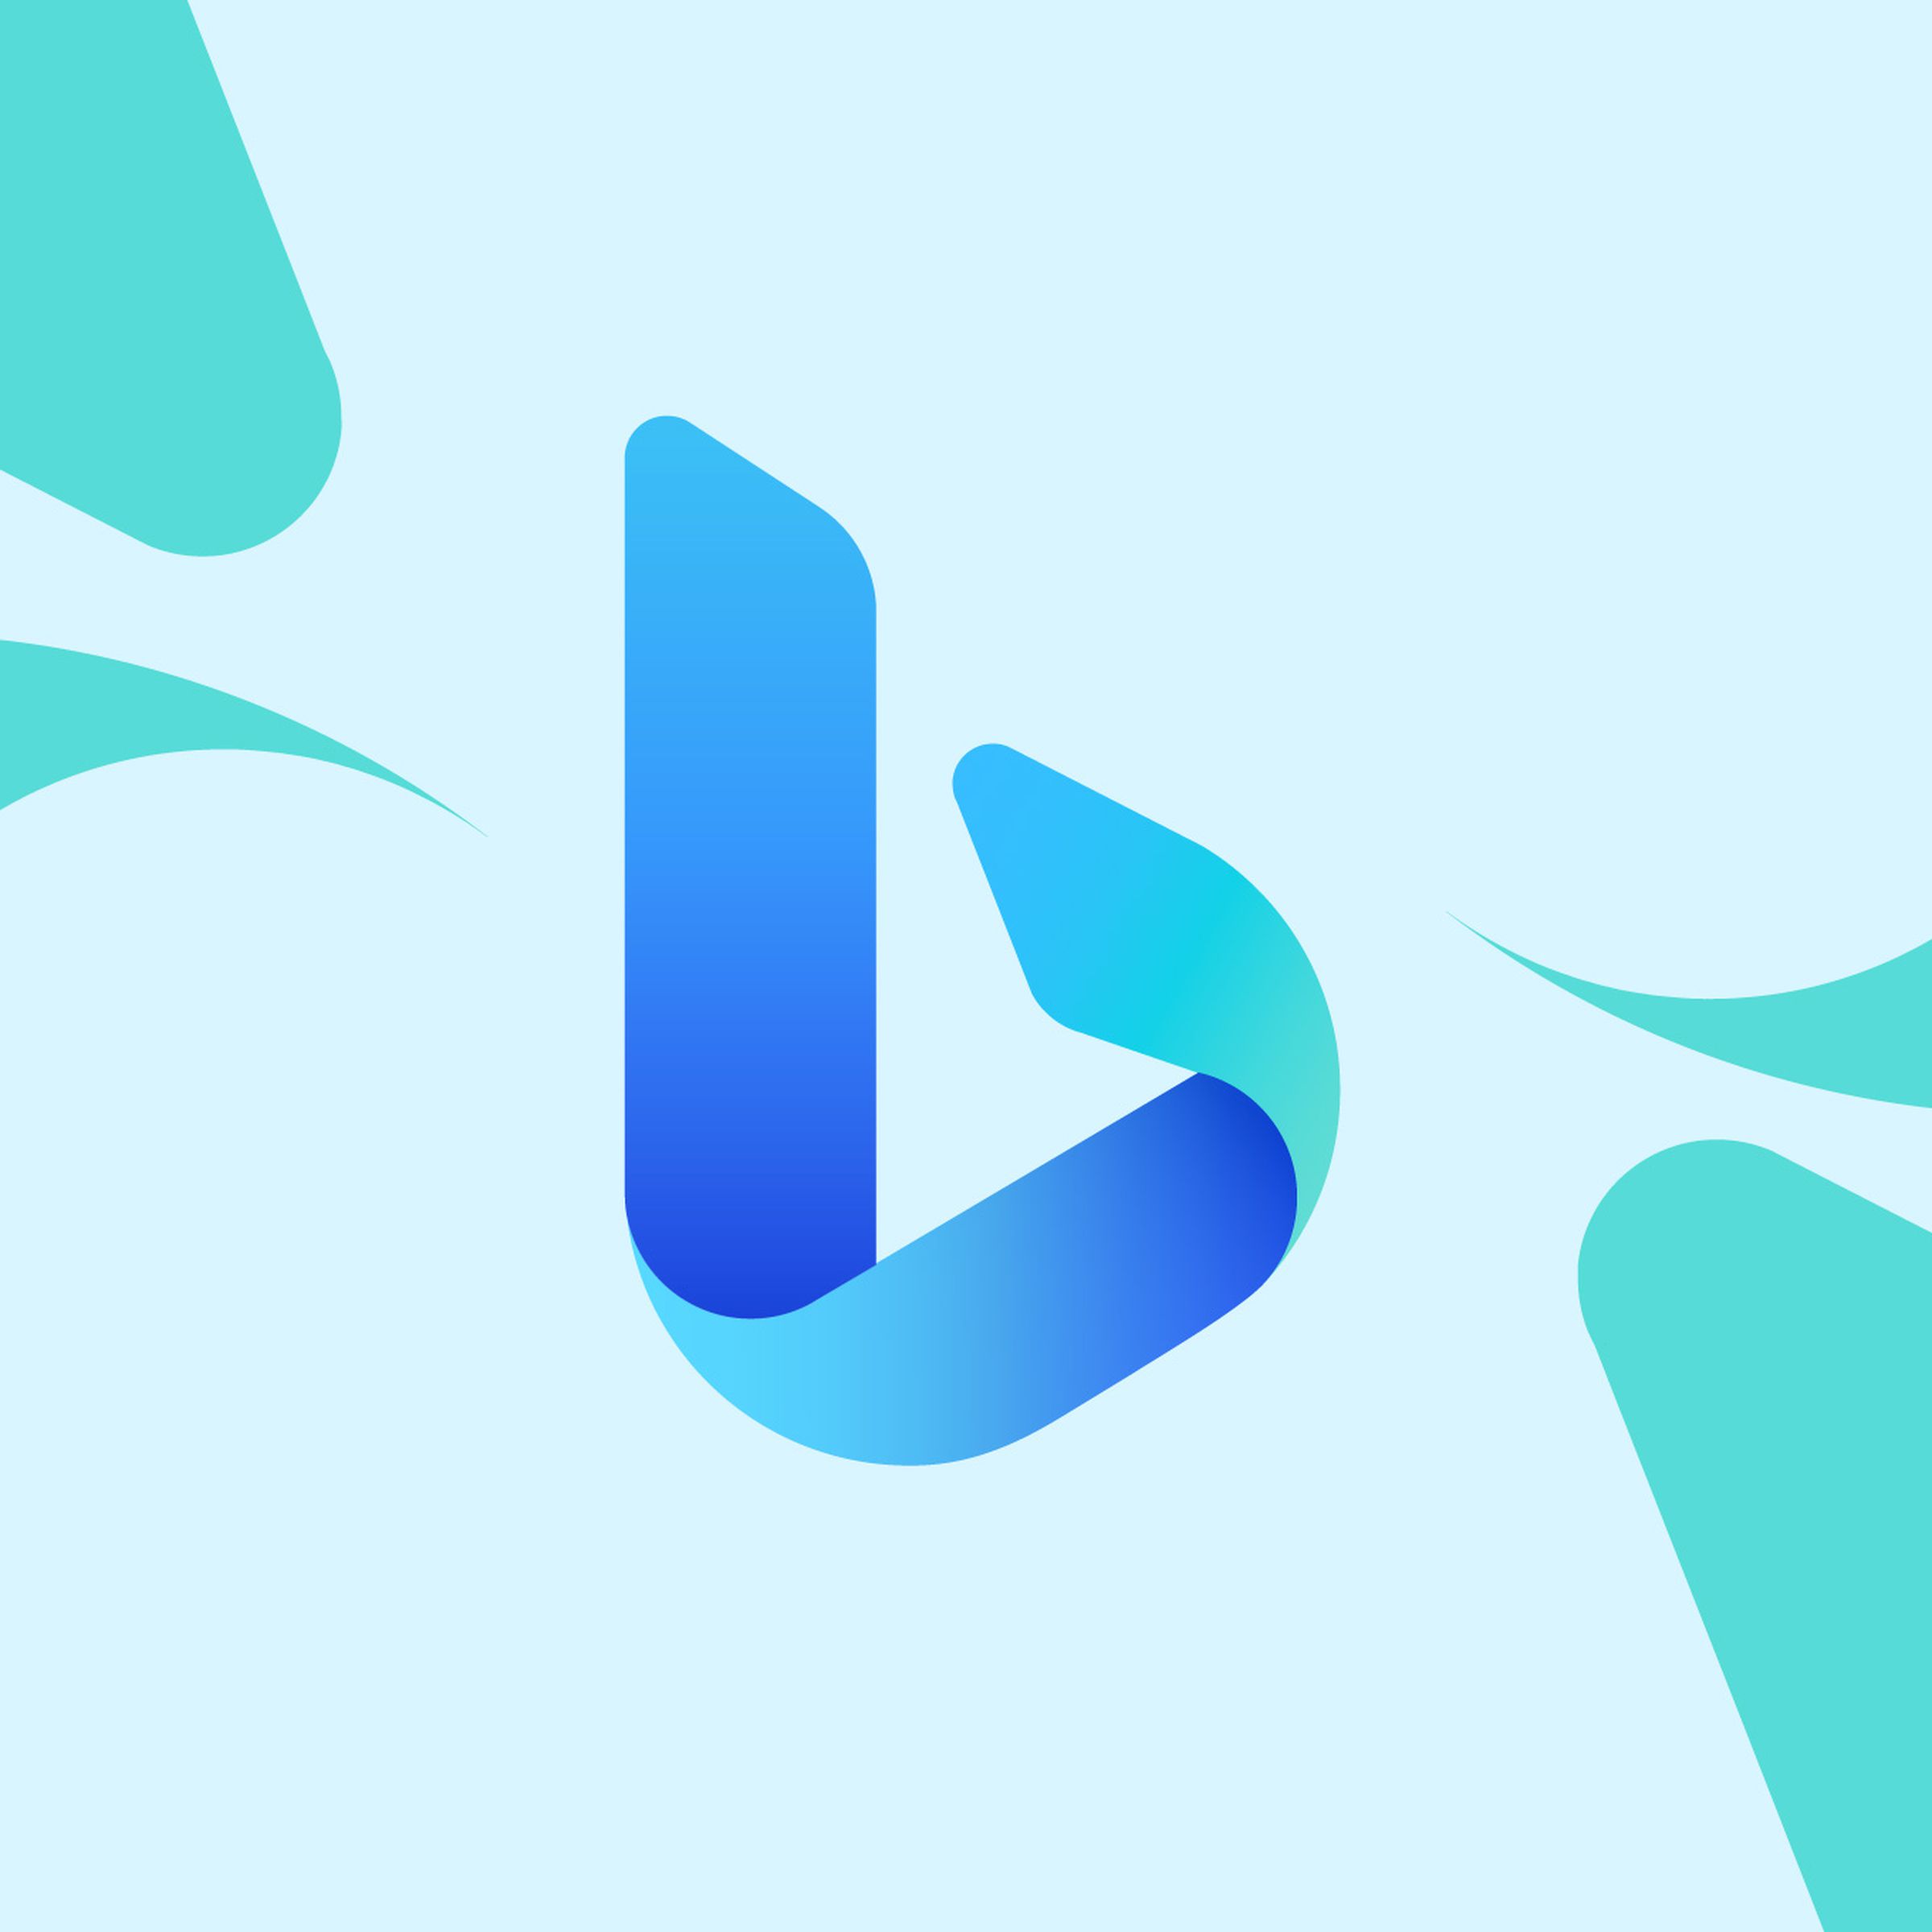 A Bing logo.